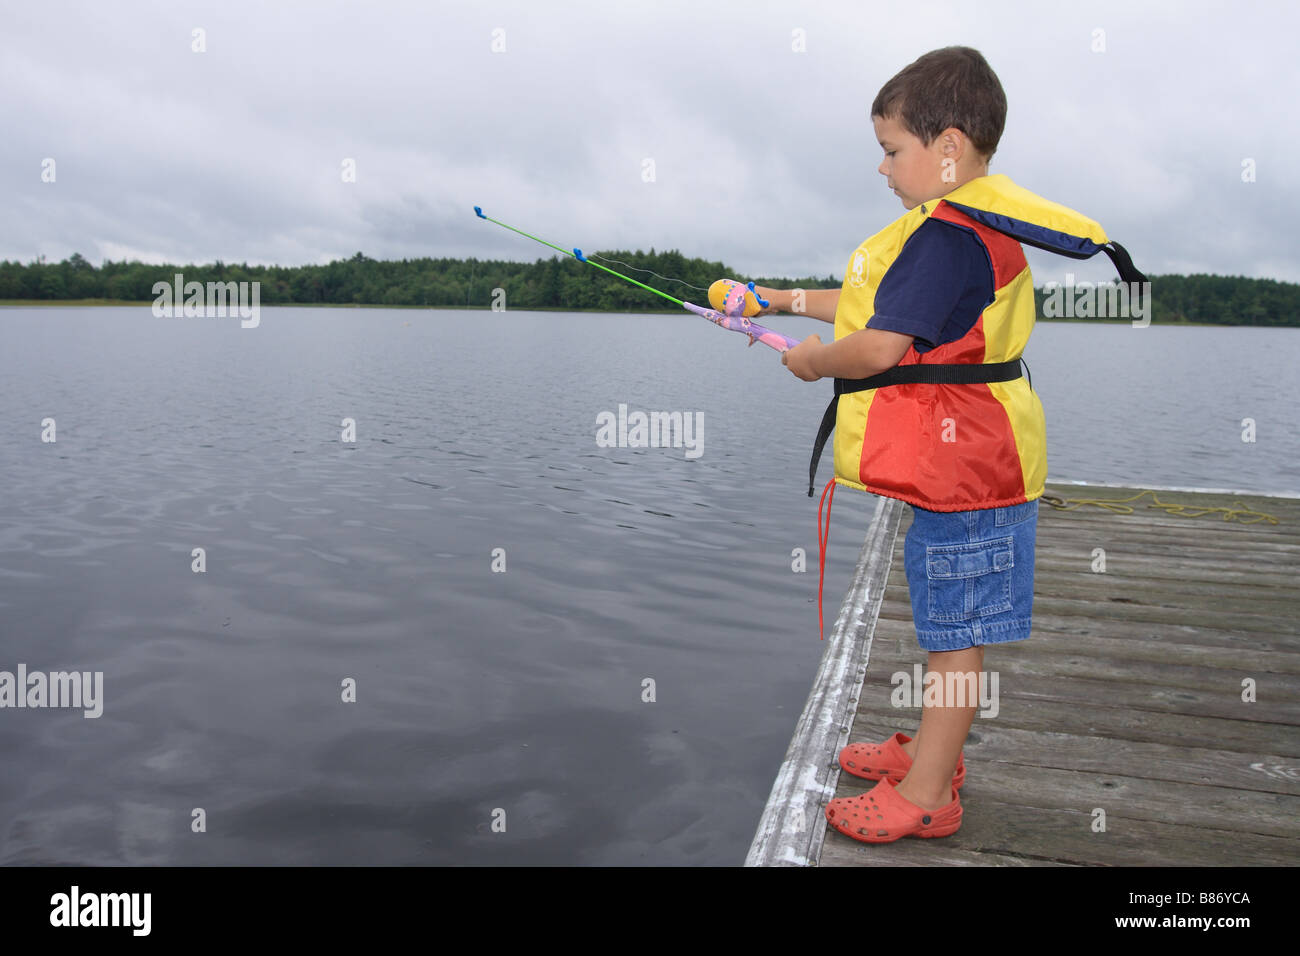 https://c8.alamy.com/comp/B86YCA/4-year-old-child-wearing-a-life-jacket-standing-on-a-wharf-using-a-B86YCA.jpg